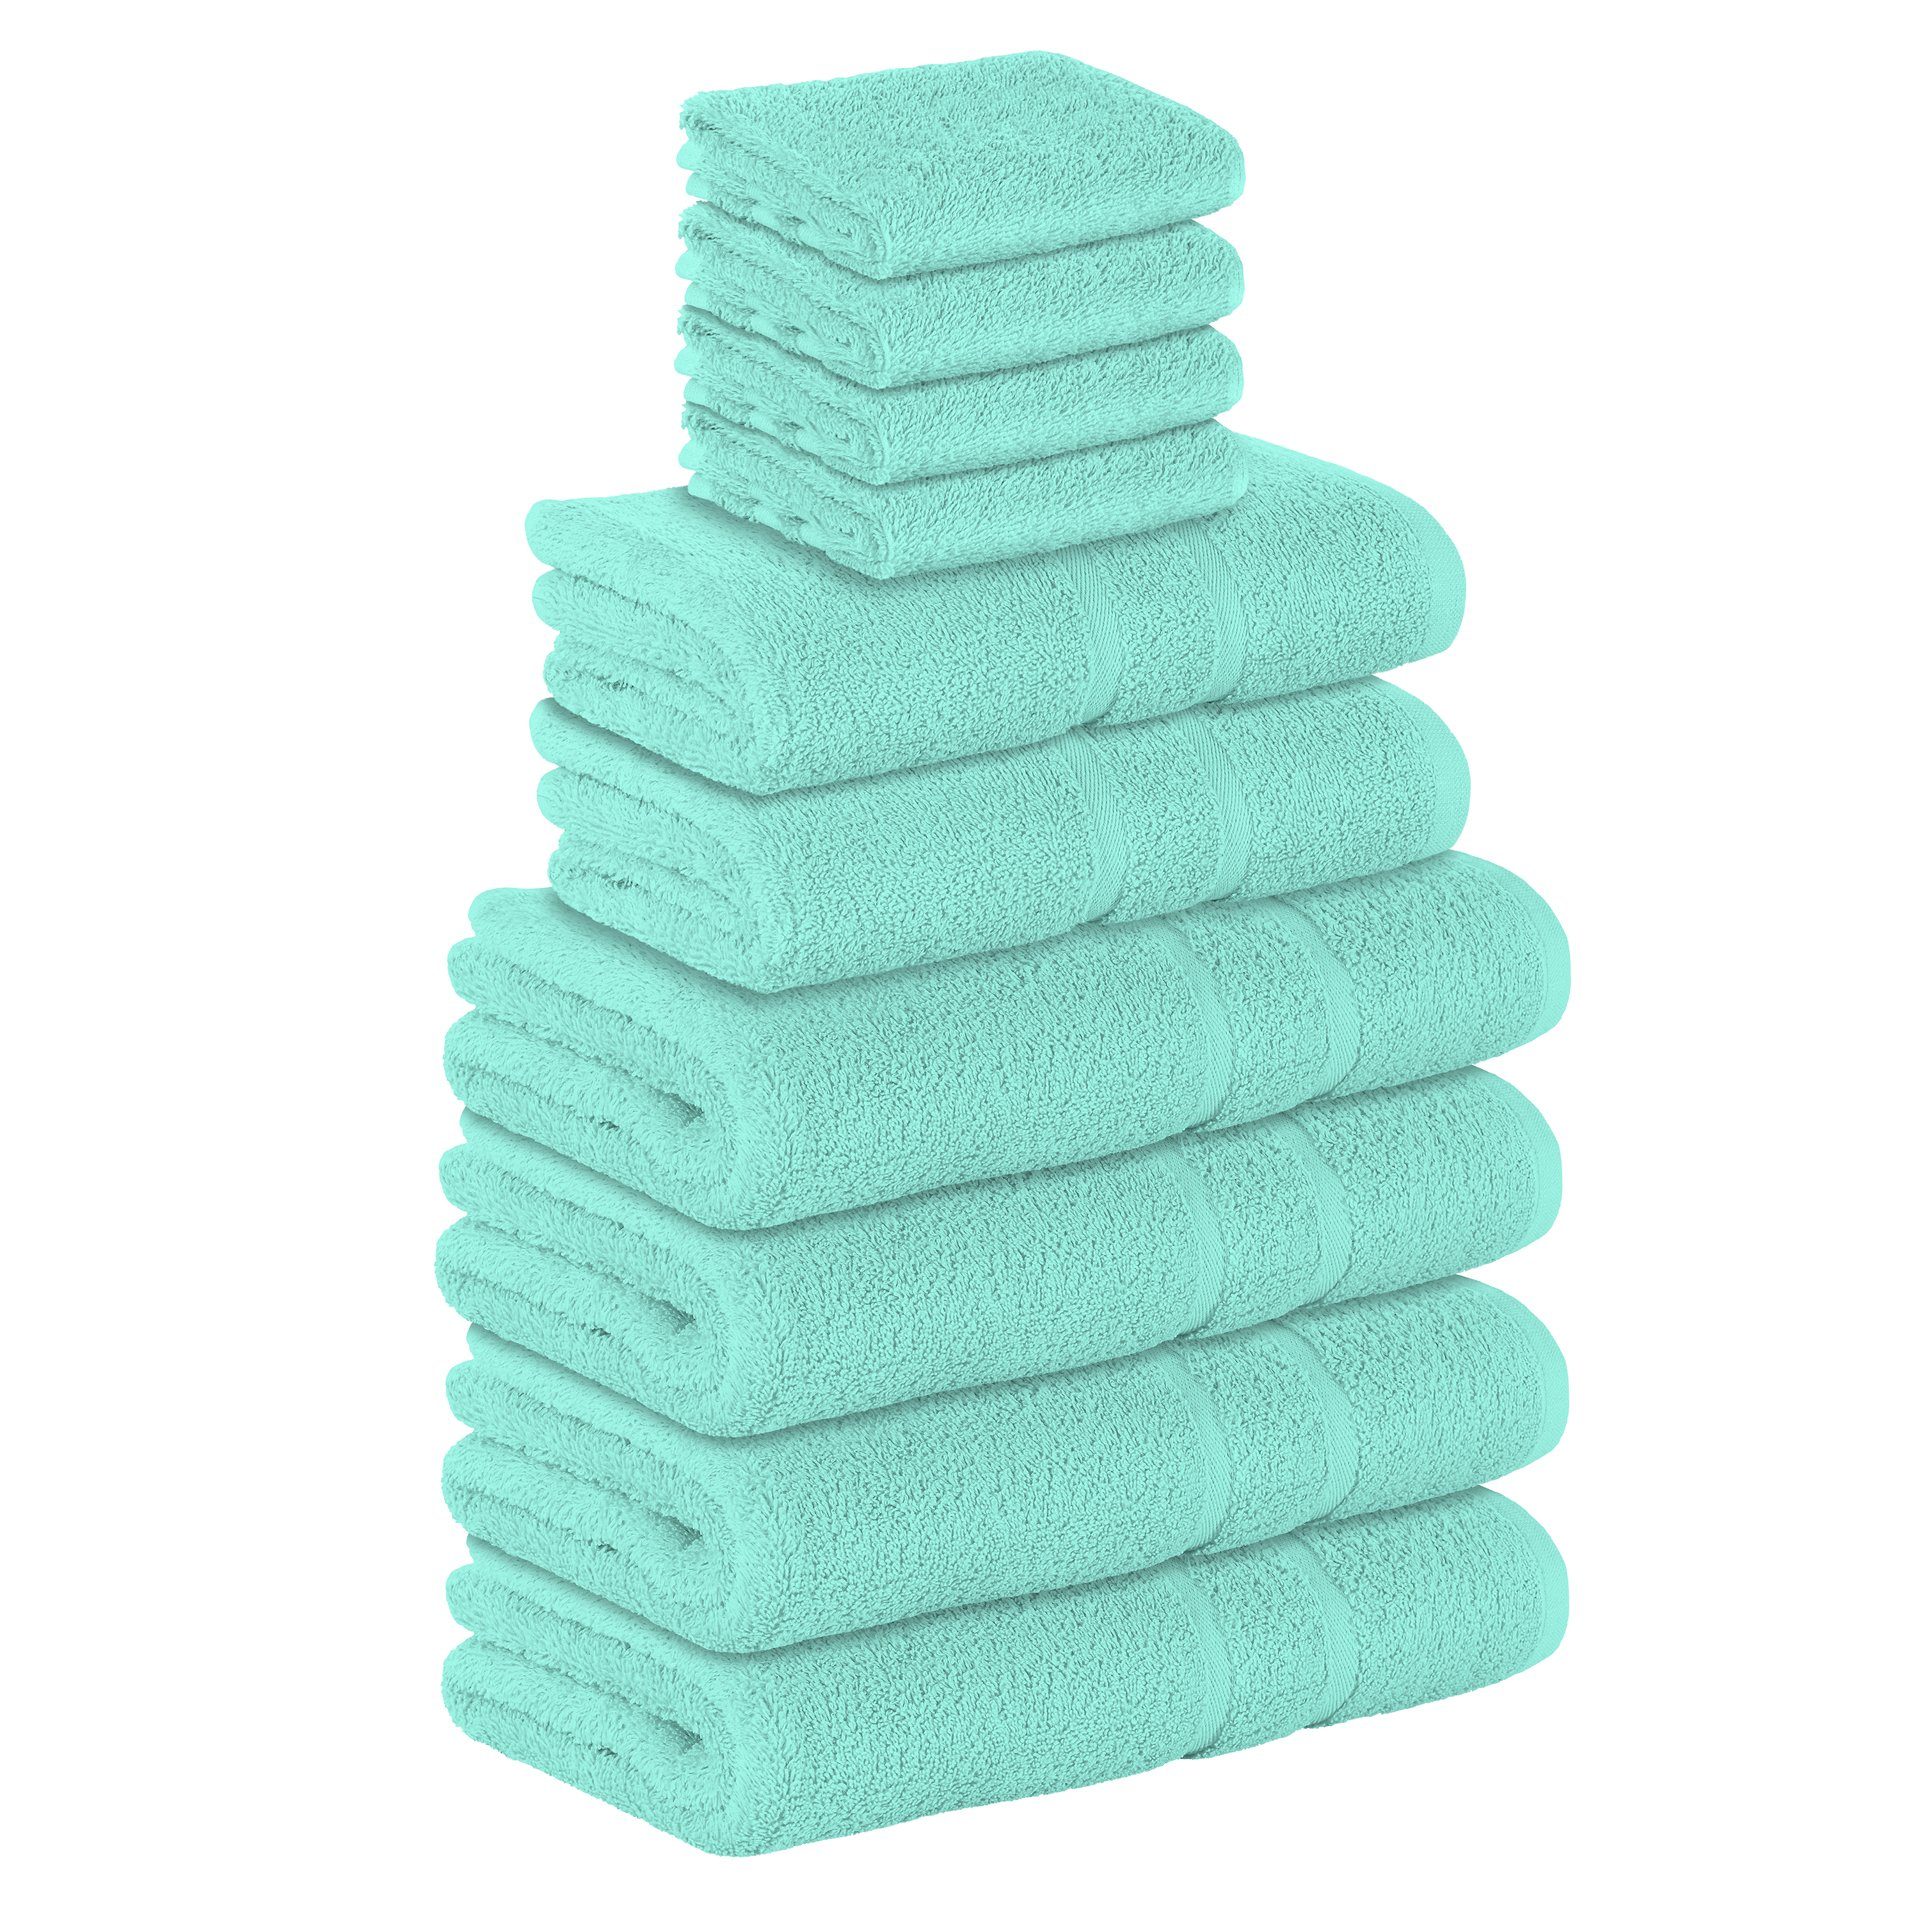 StickandShine Handtuch Set 4x Gästehandtuch 2x Handtücher 4x Duschtücher als SET in verschiedenen Farben (10 Teilig) 100% Baumwolle 500 GSM Frottee 10er Handtuch Pack, 100% Baumwolle 500 GSM Mint